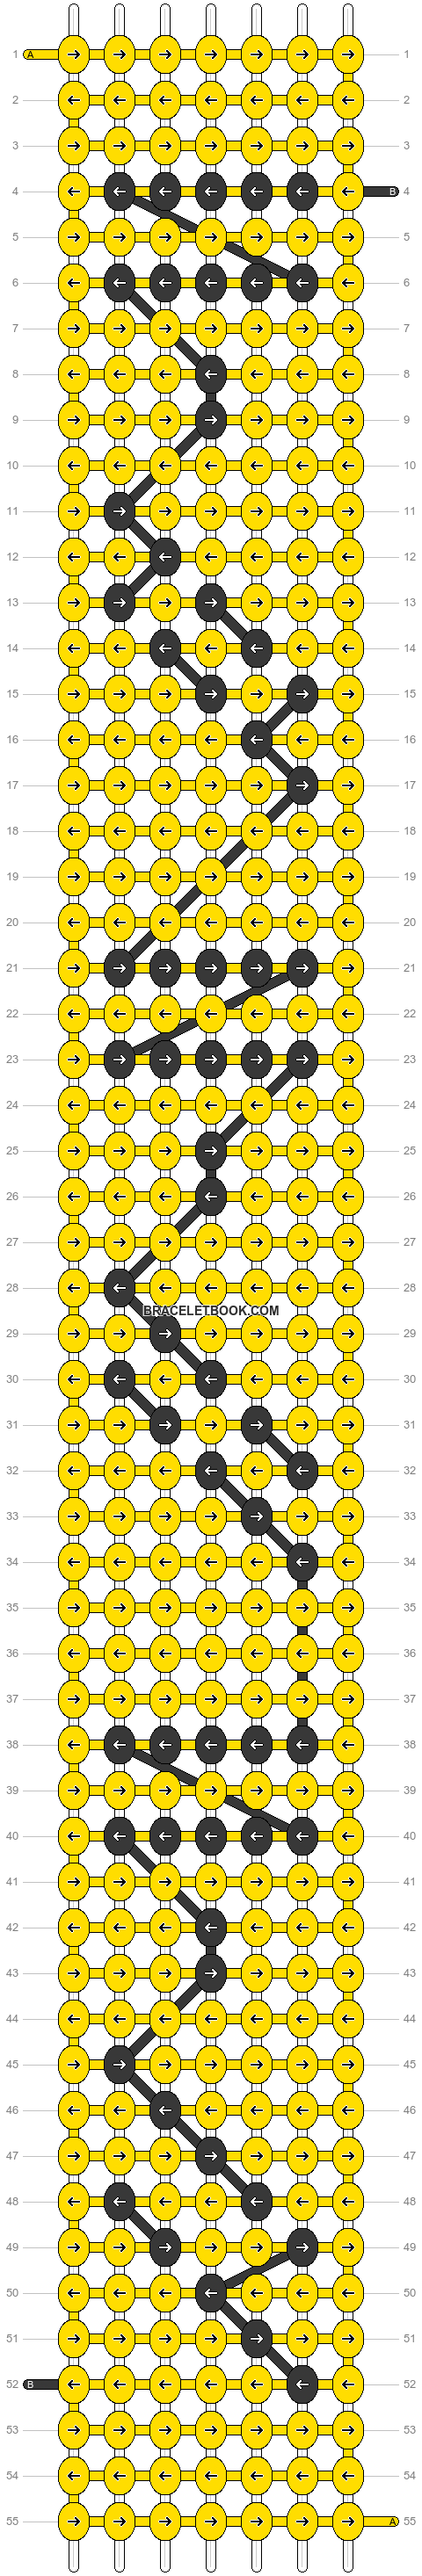 Alpha pattern #70998 variation #130684 pattern